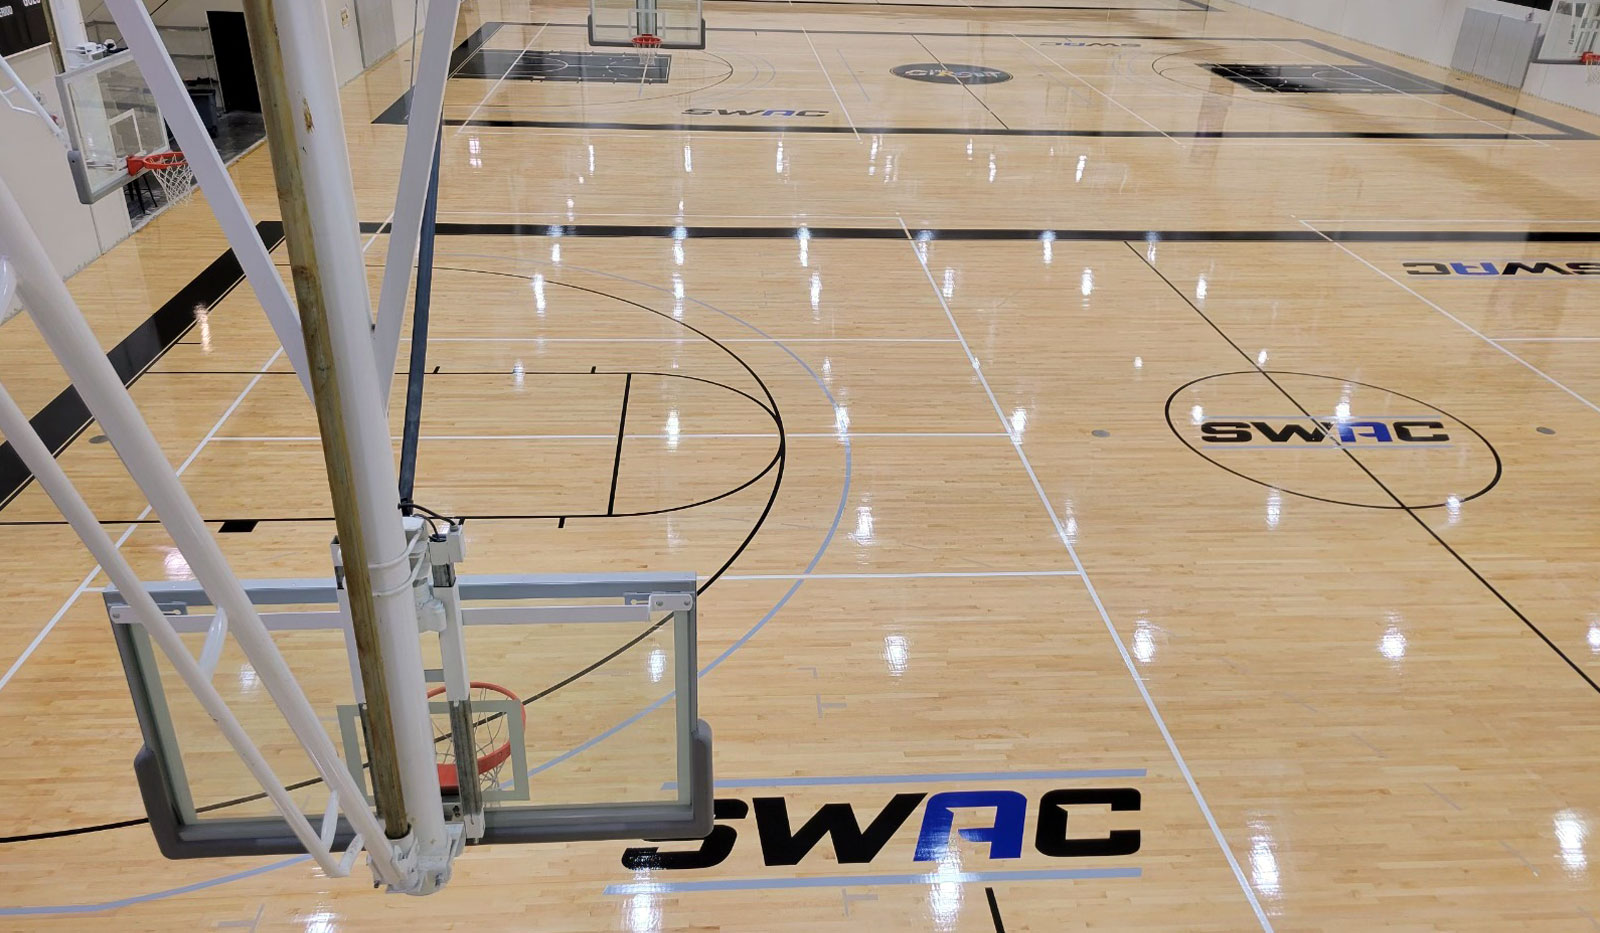 swac full courts shot